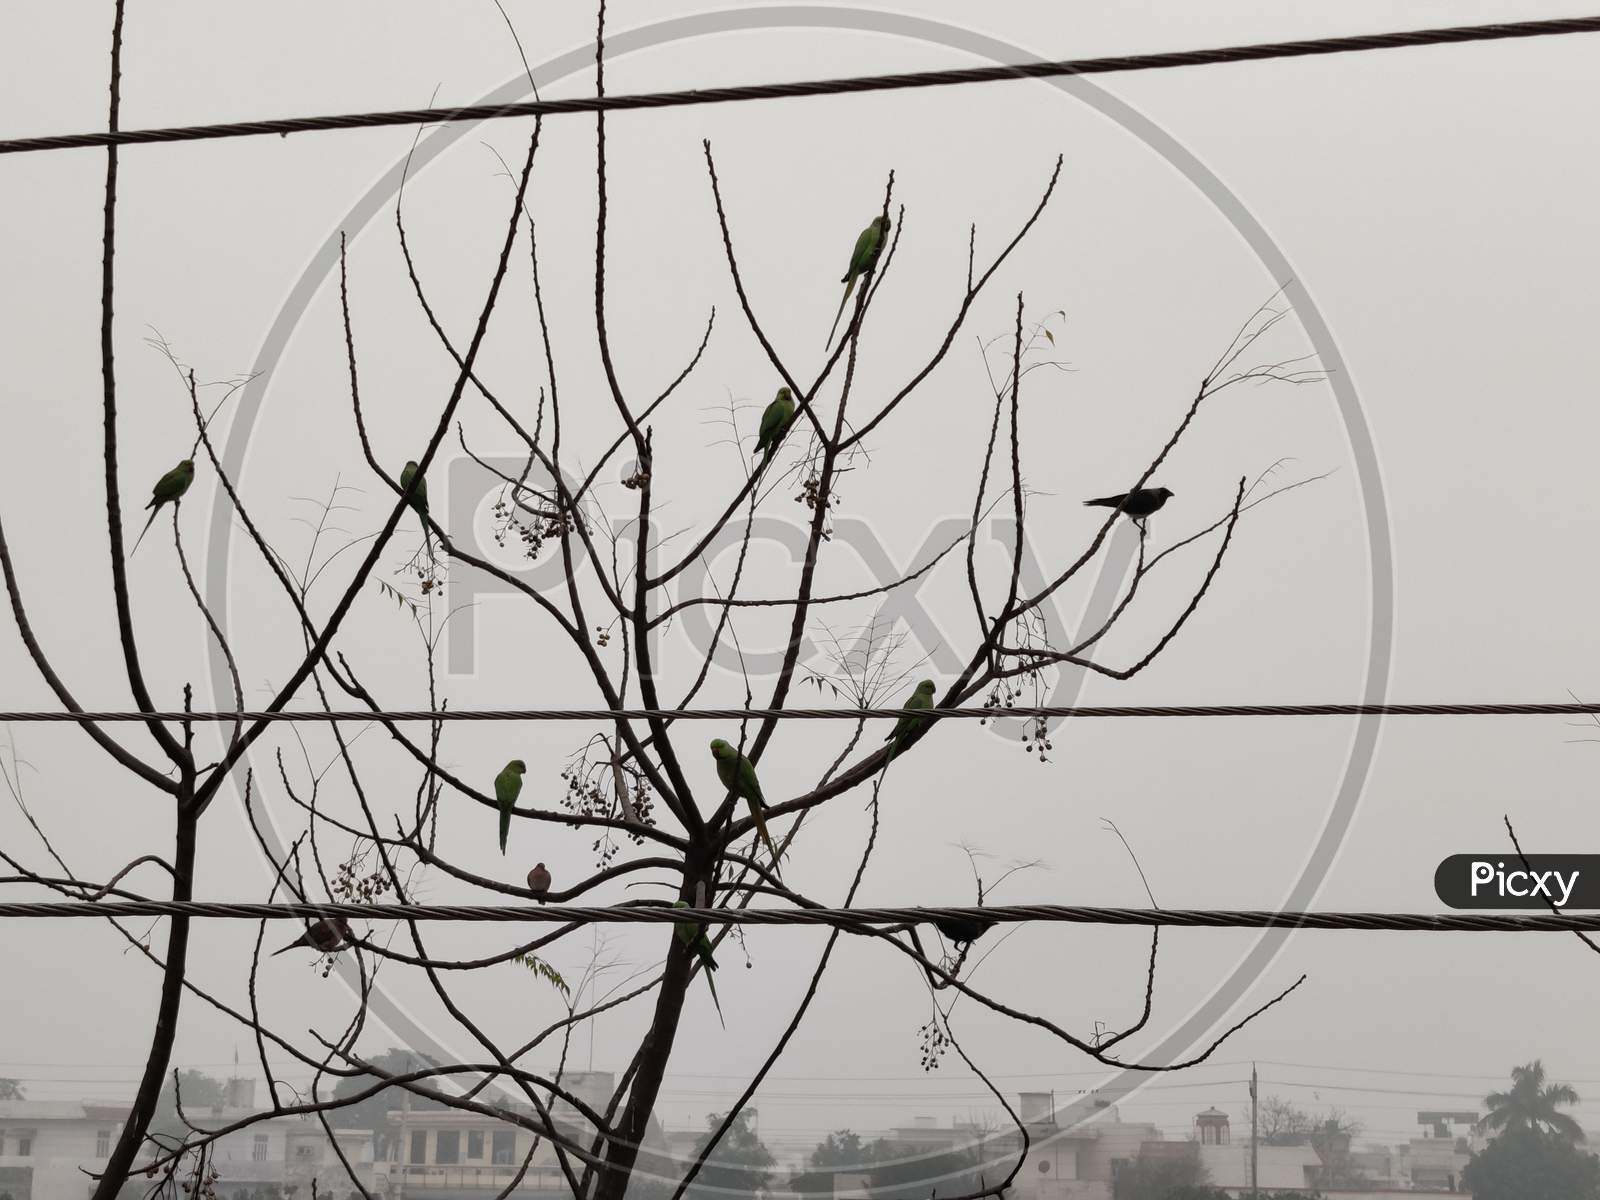 Foggy day enjoying birds